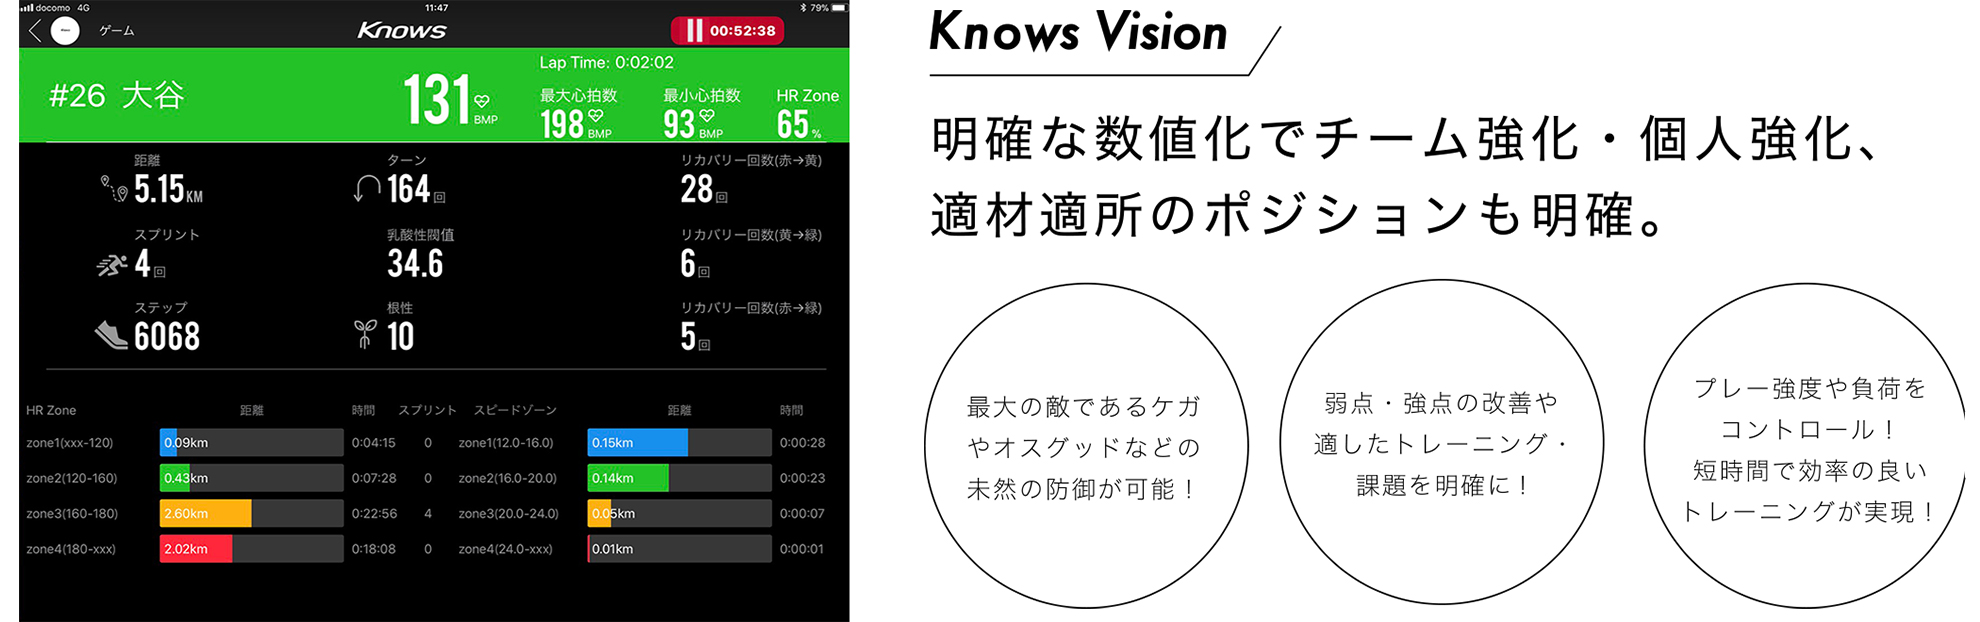 knowsvision